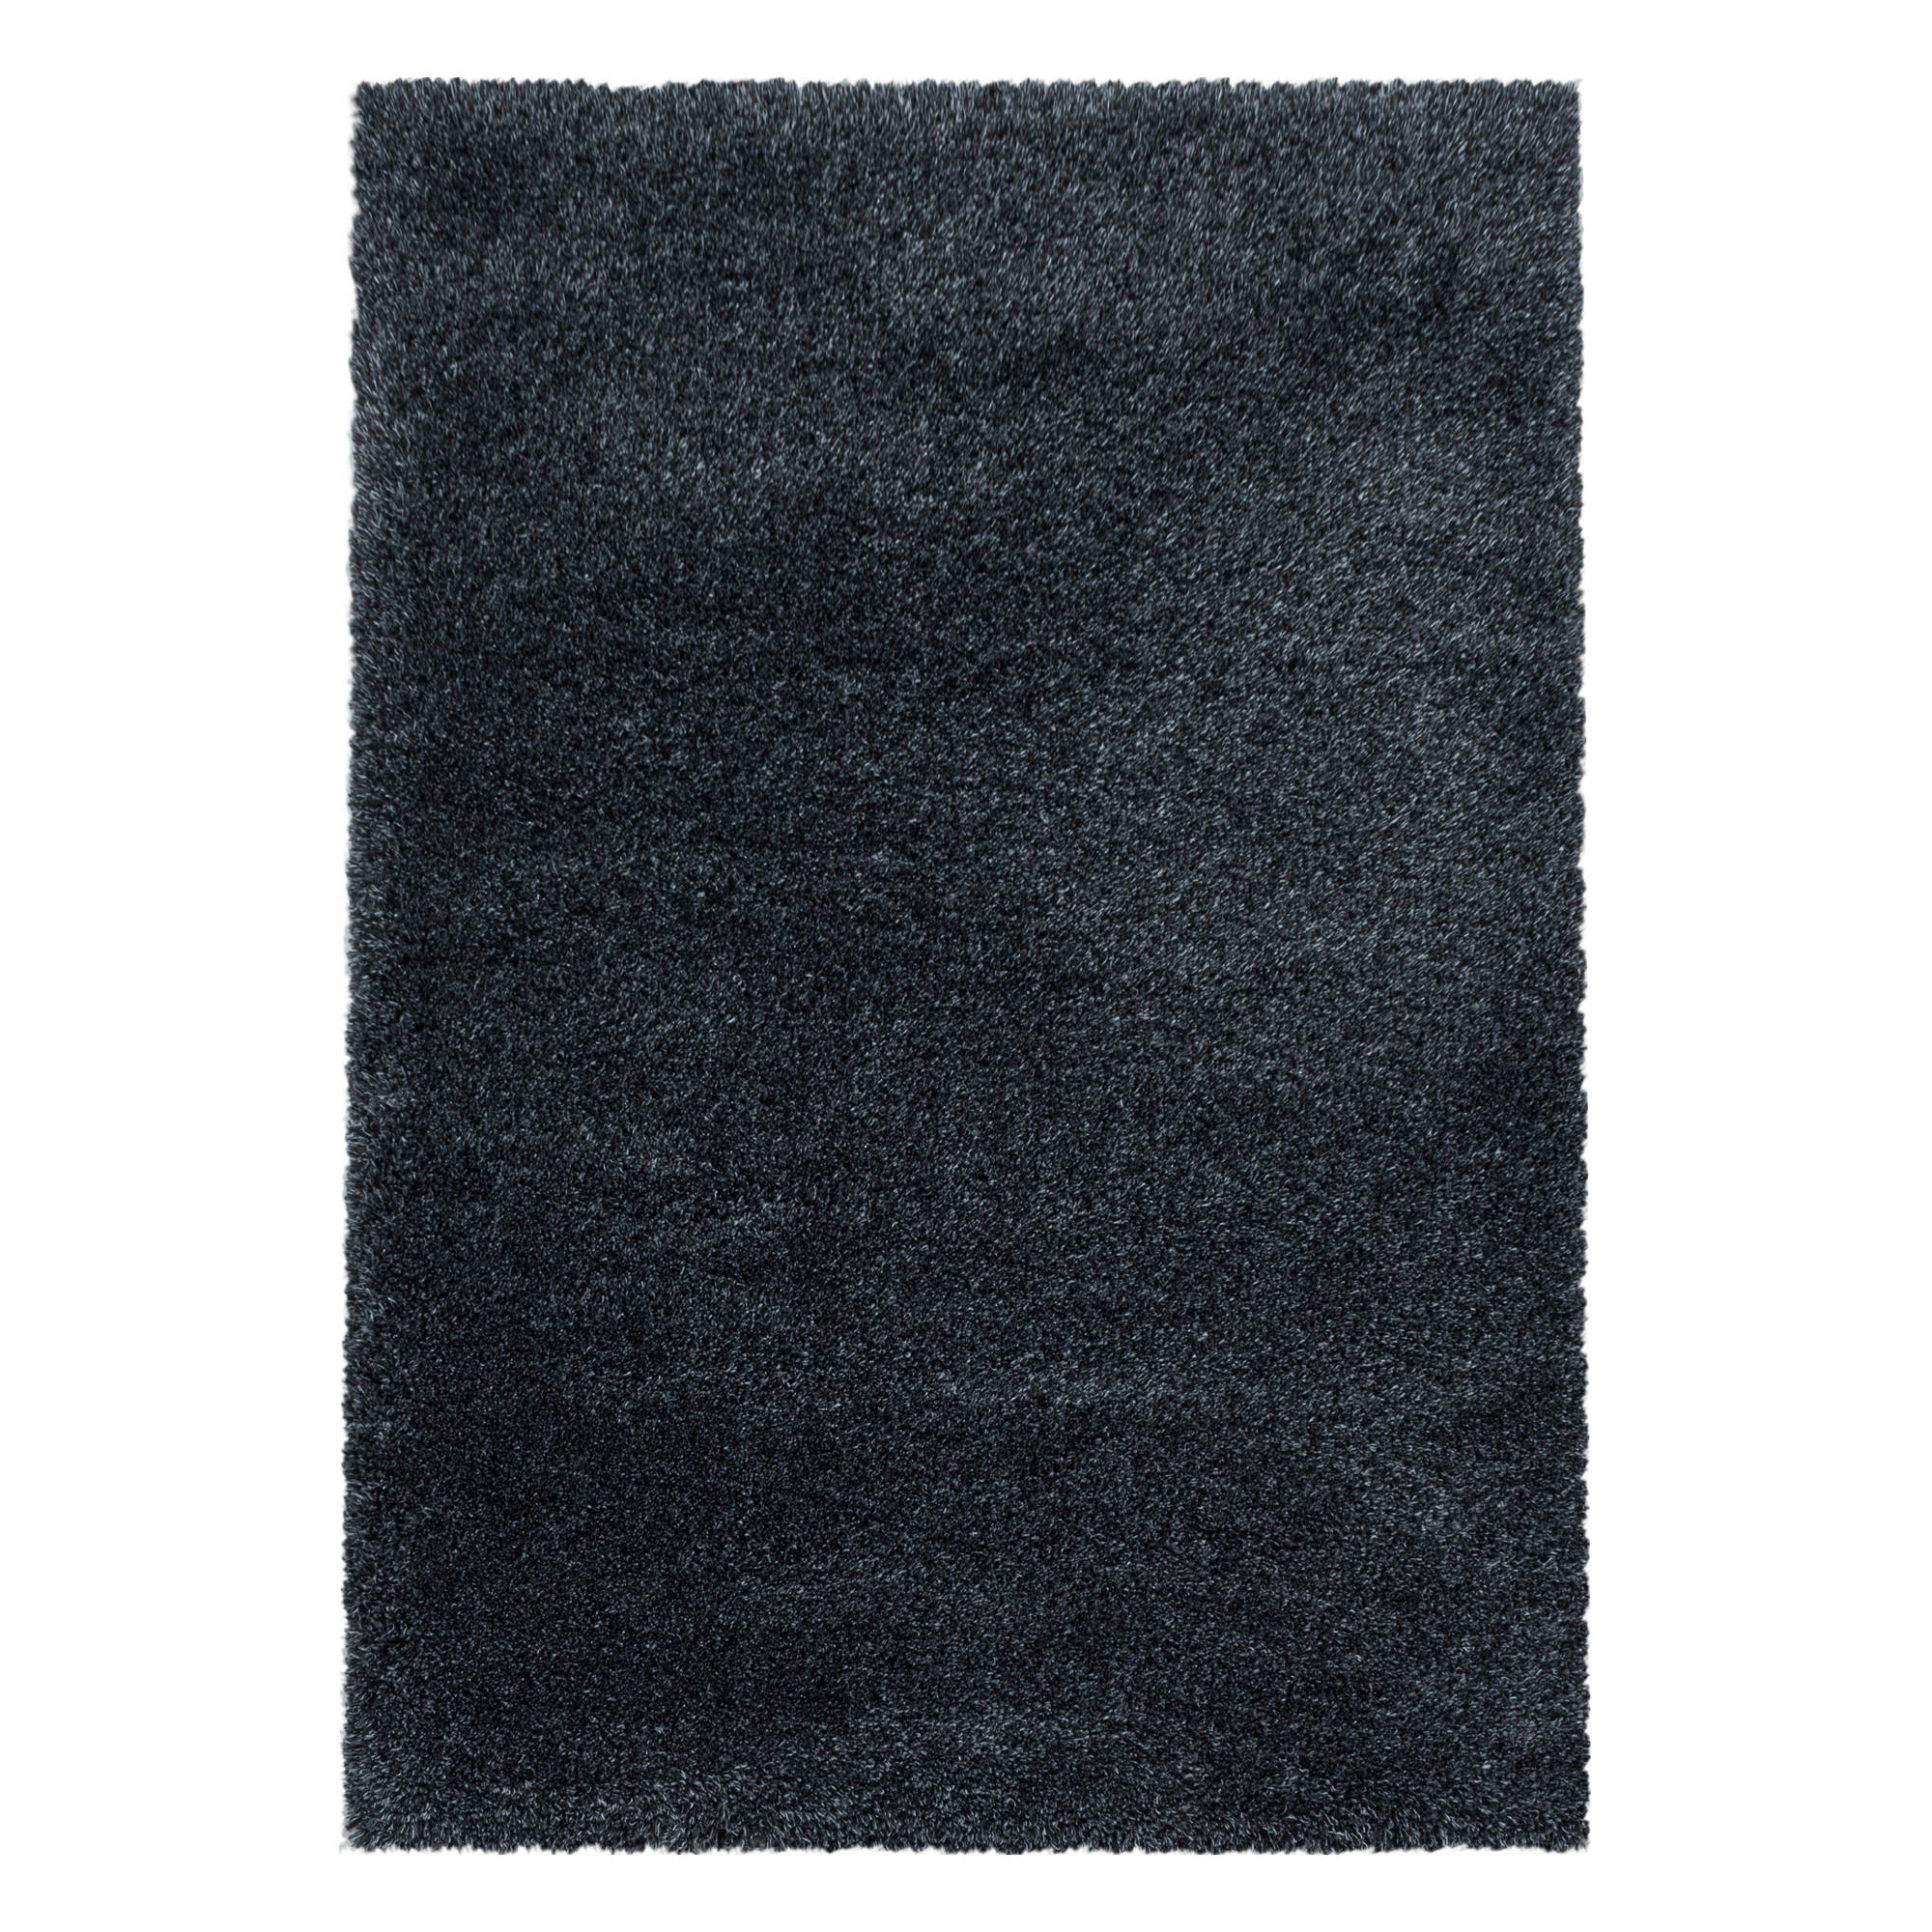 HOCHFLORTEPPICH  60/110 cm  gewebt  Anthrazit   - Anthrazit, Basics, Textil (60/110cm) - Novel